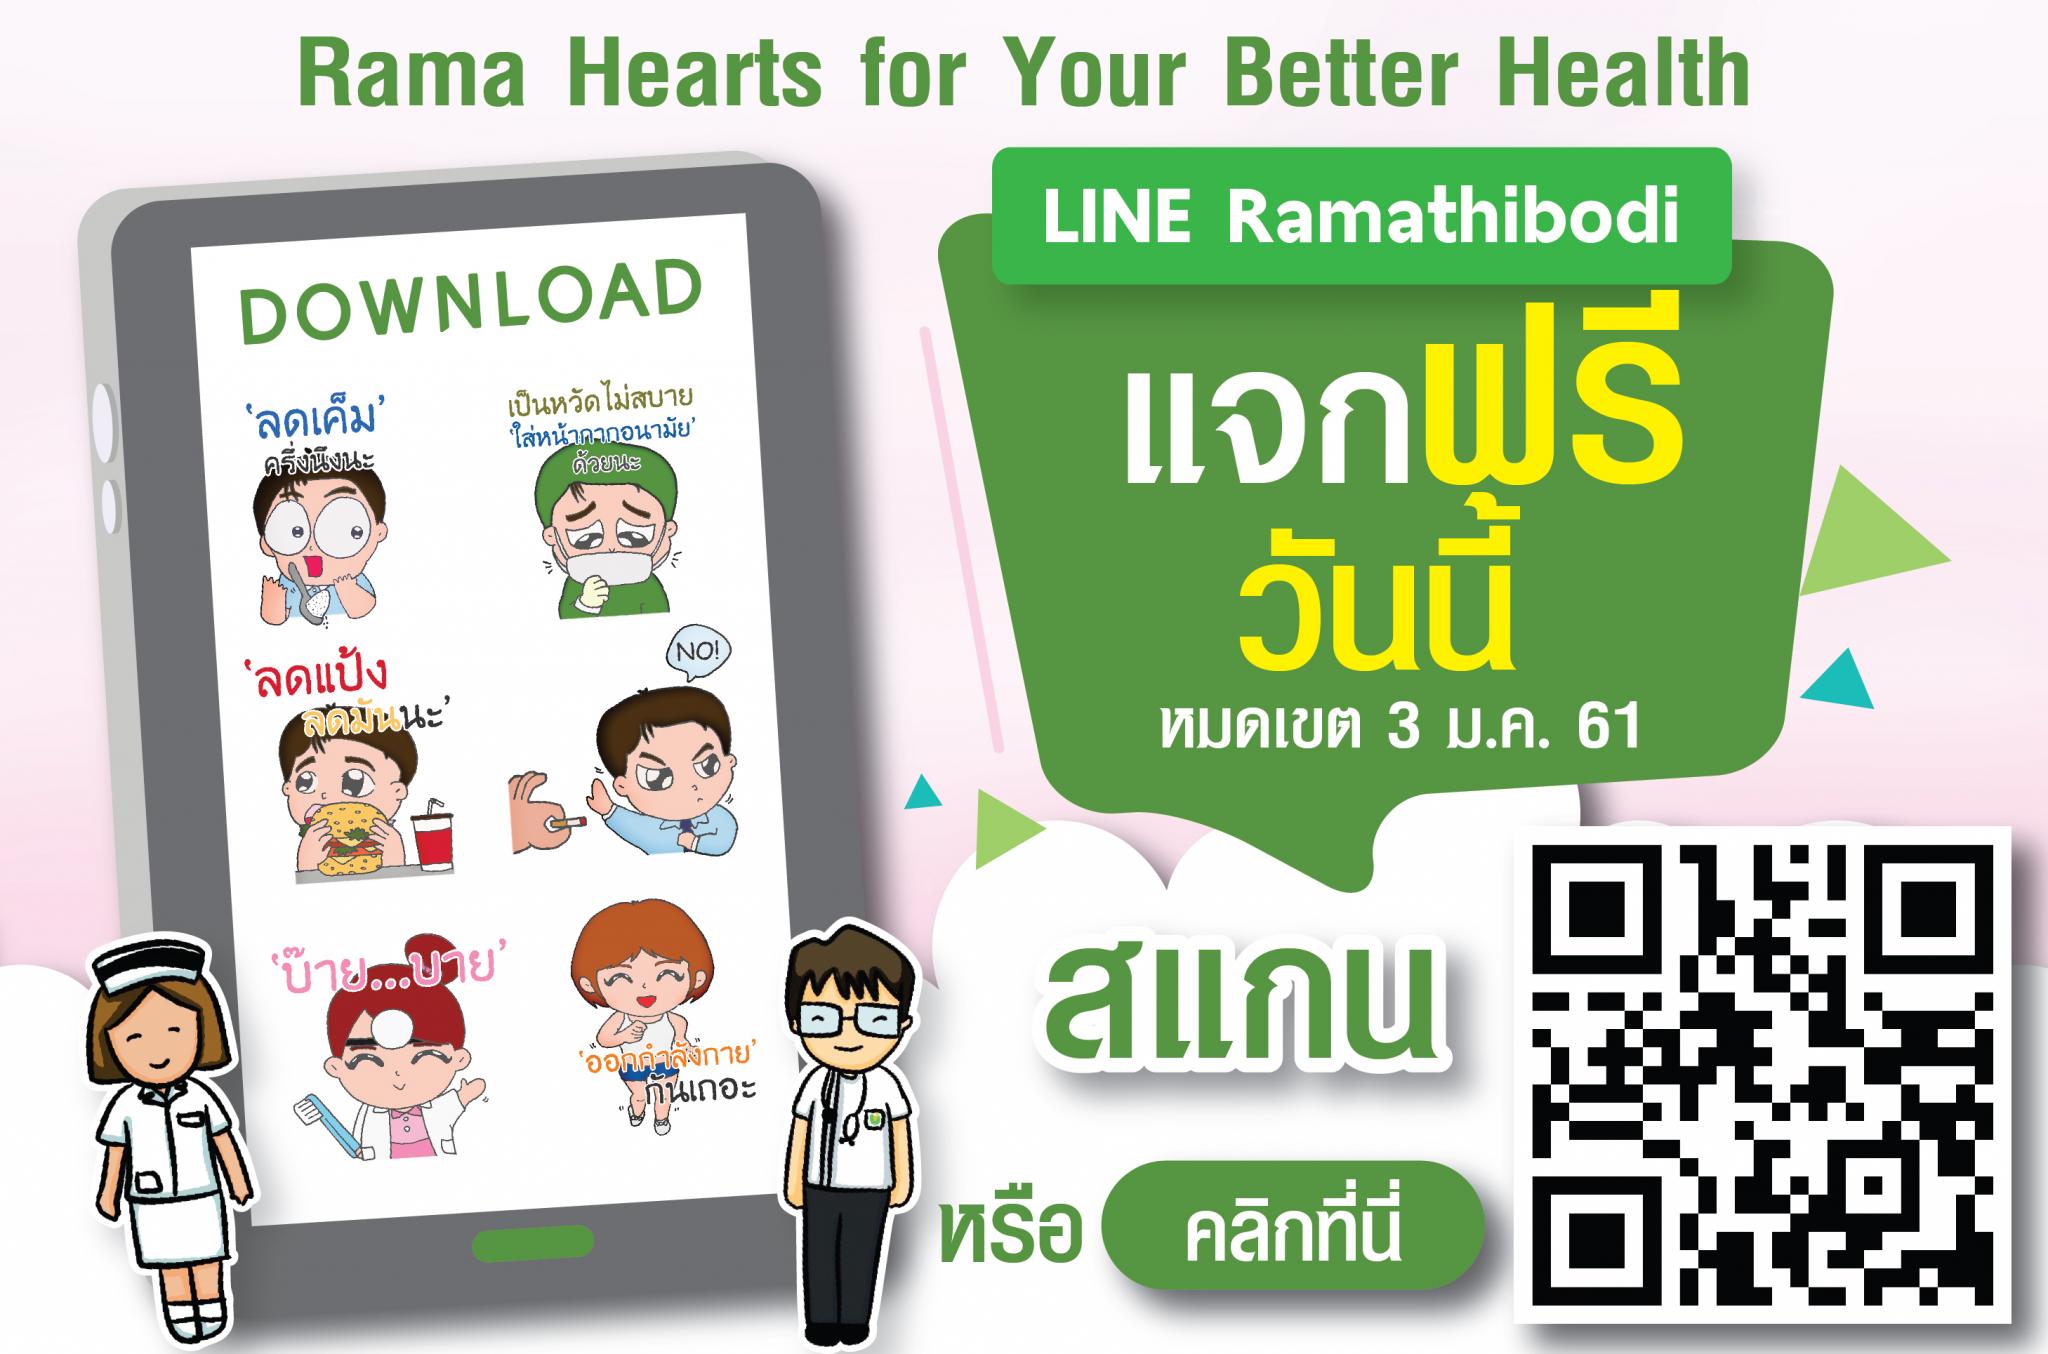 LINE Ramathibodi รพ. รามาธิบดี แจกฟรี stickers  ด้วยความห่วงใยแบบน่ารัก ๆ  Rama Hearts for Your Better Health